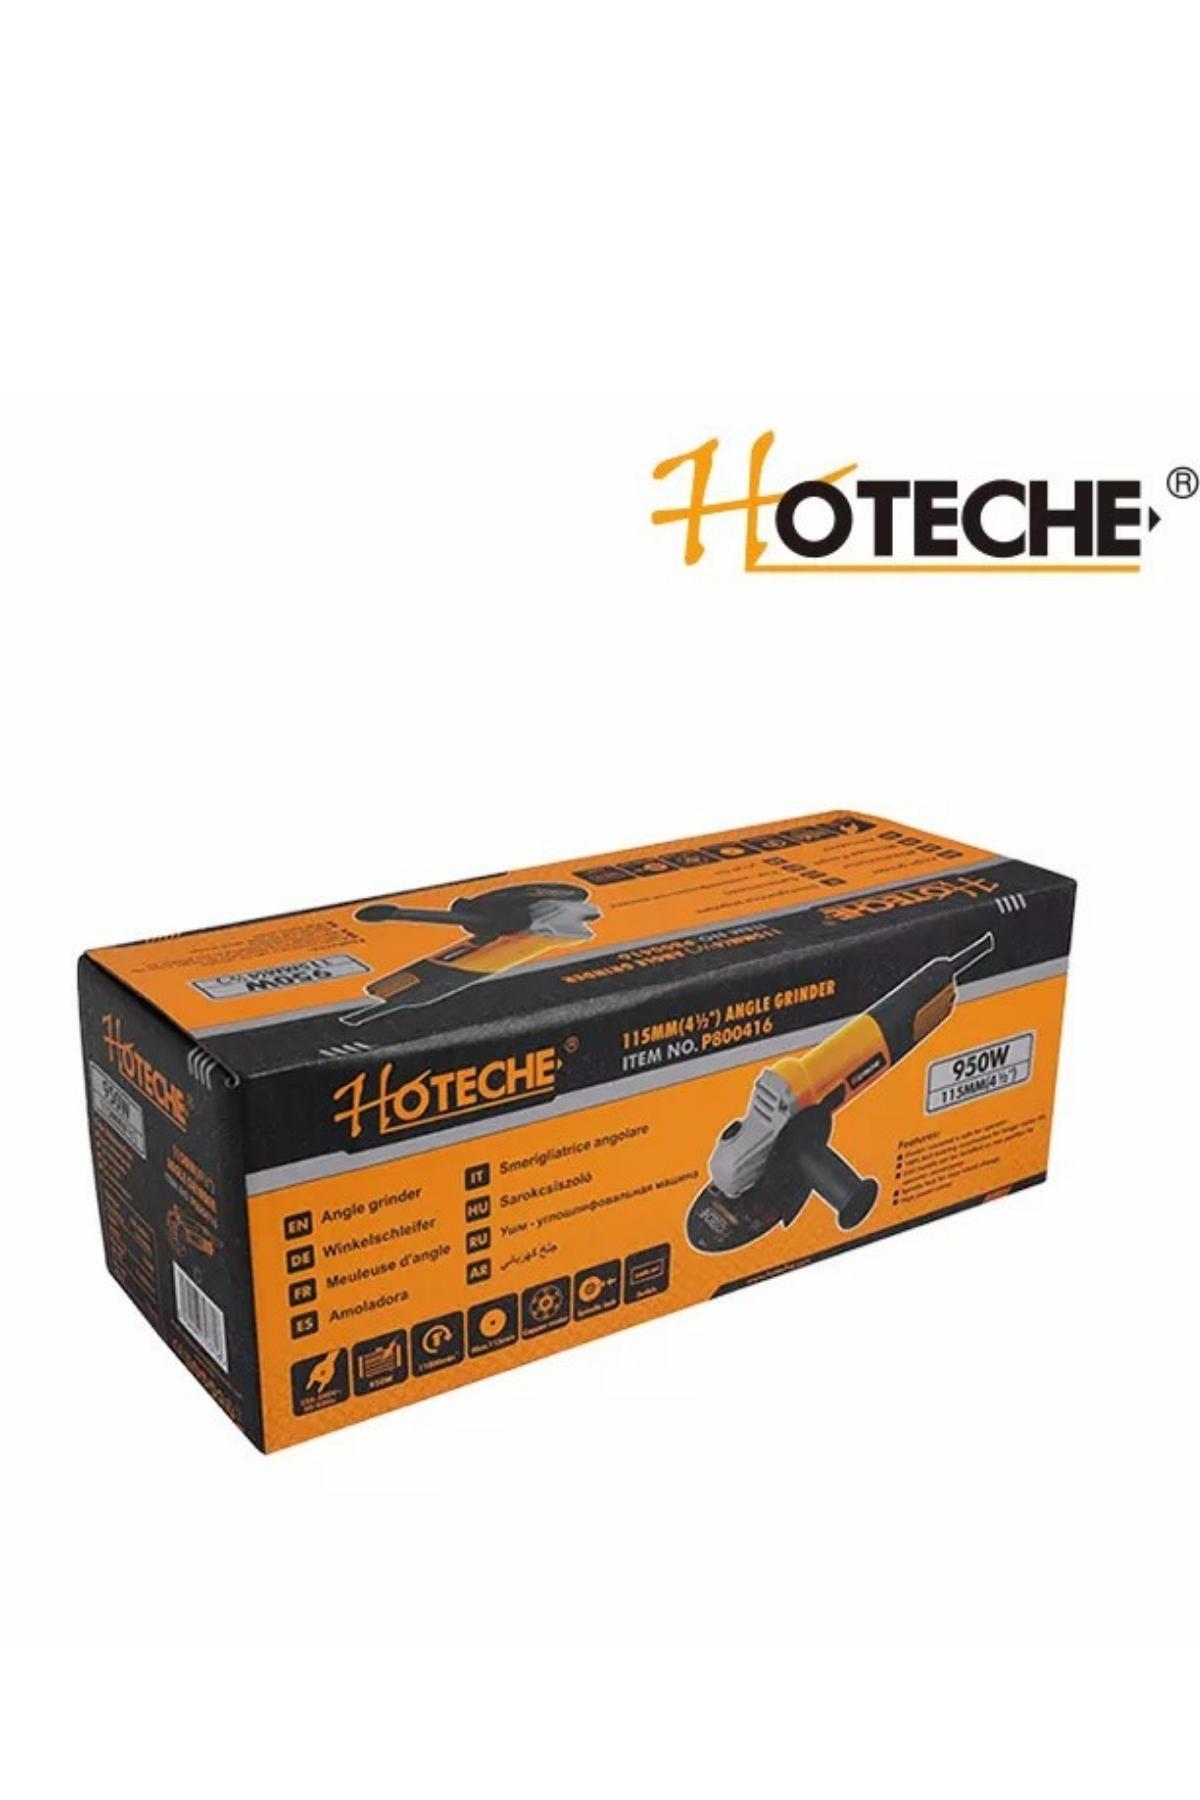 Hoteche P800416 Taşlama Makinesi (150 MM, 950 W) 